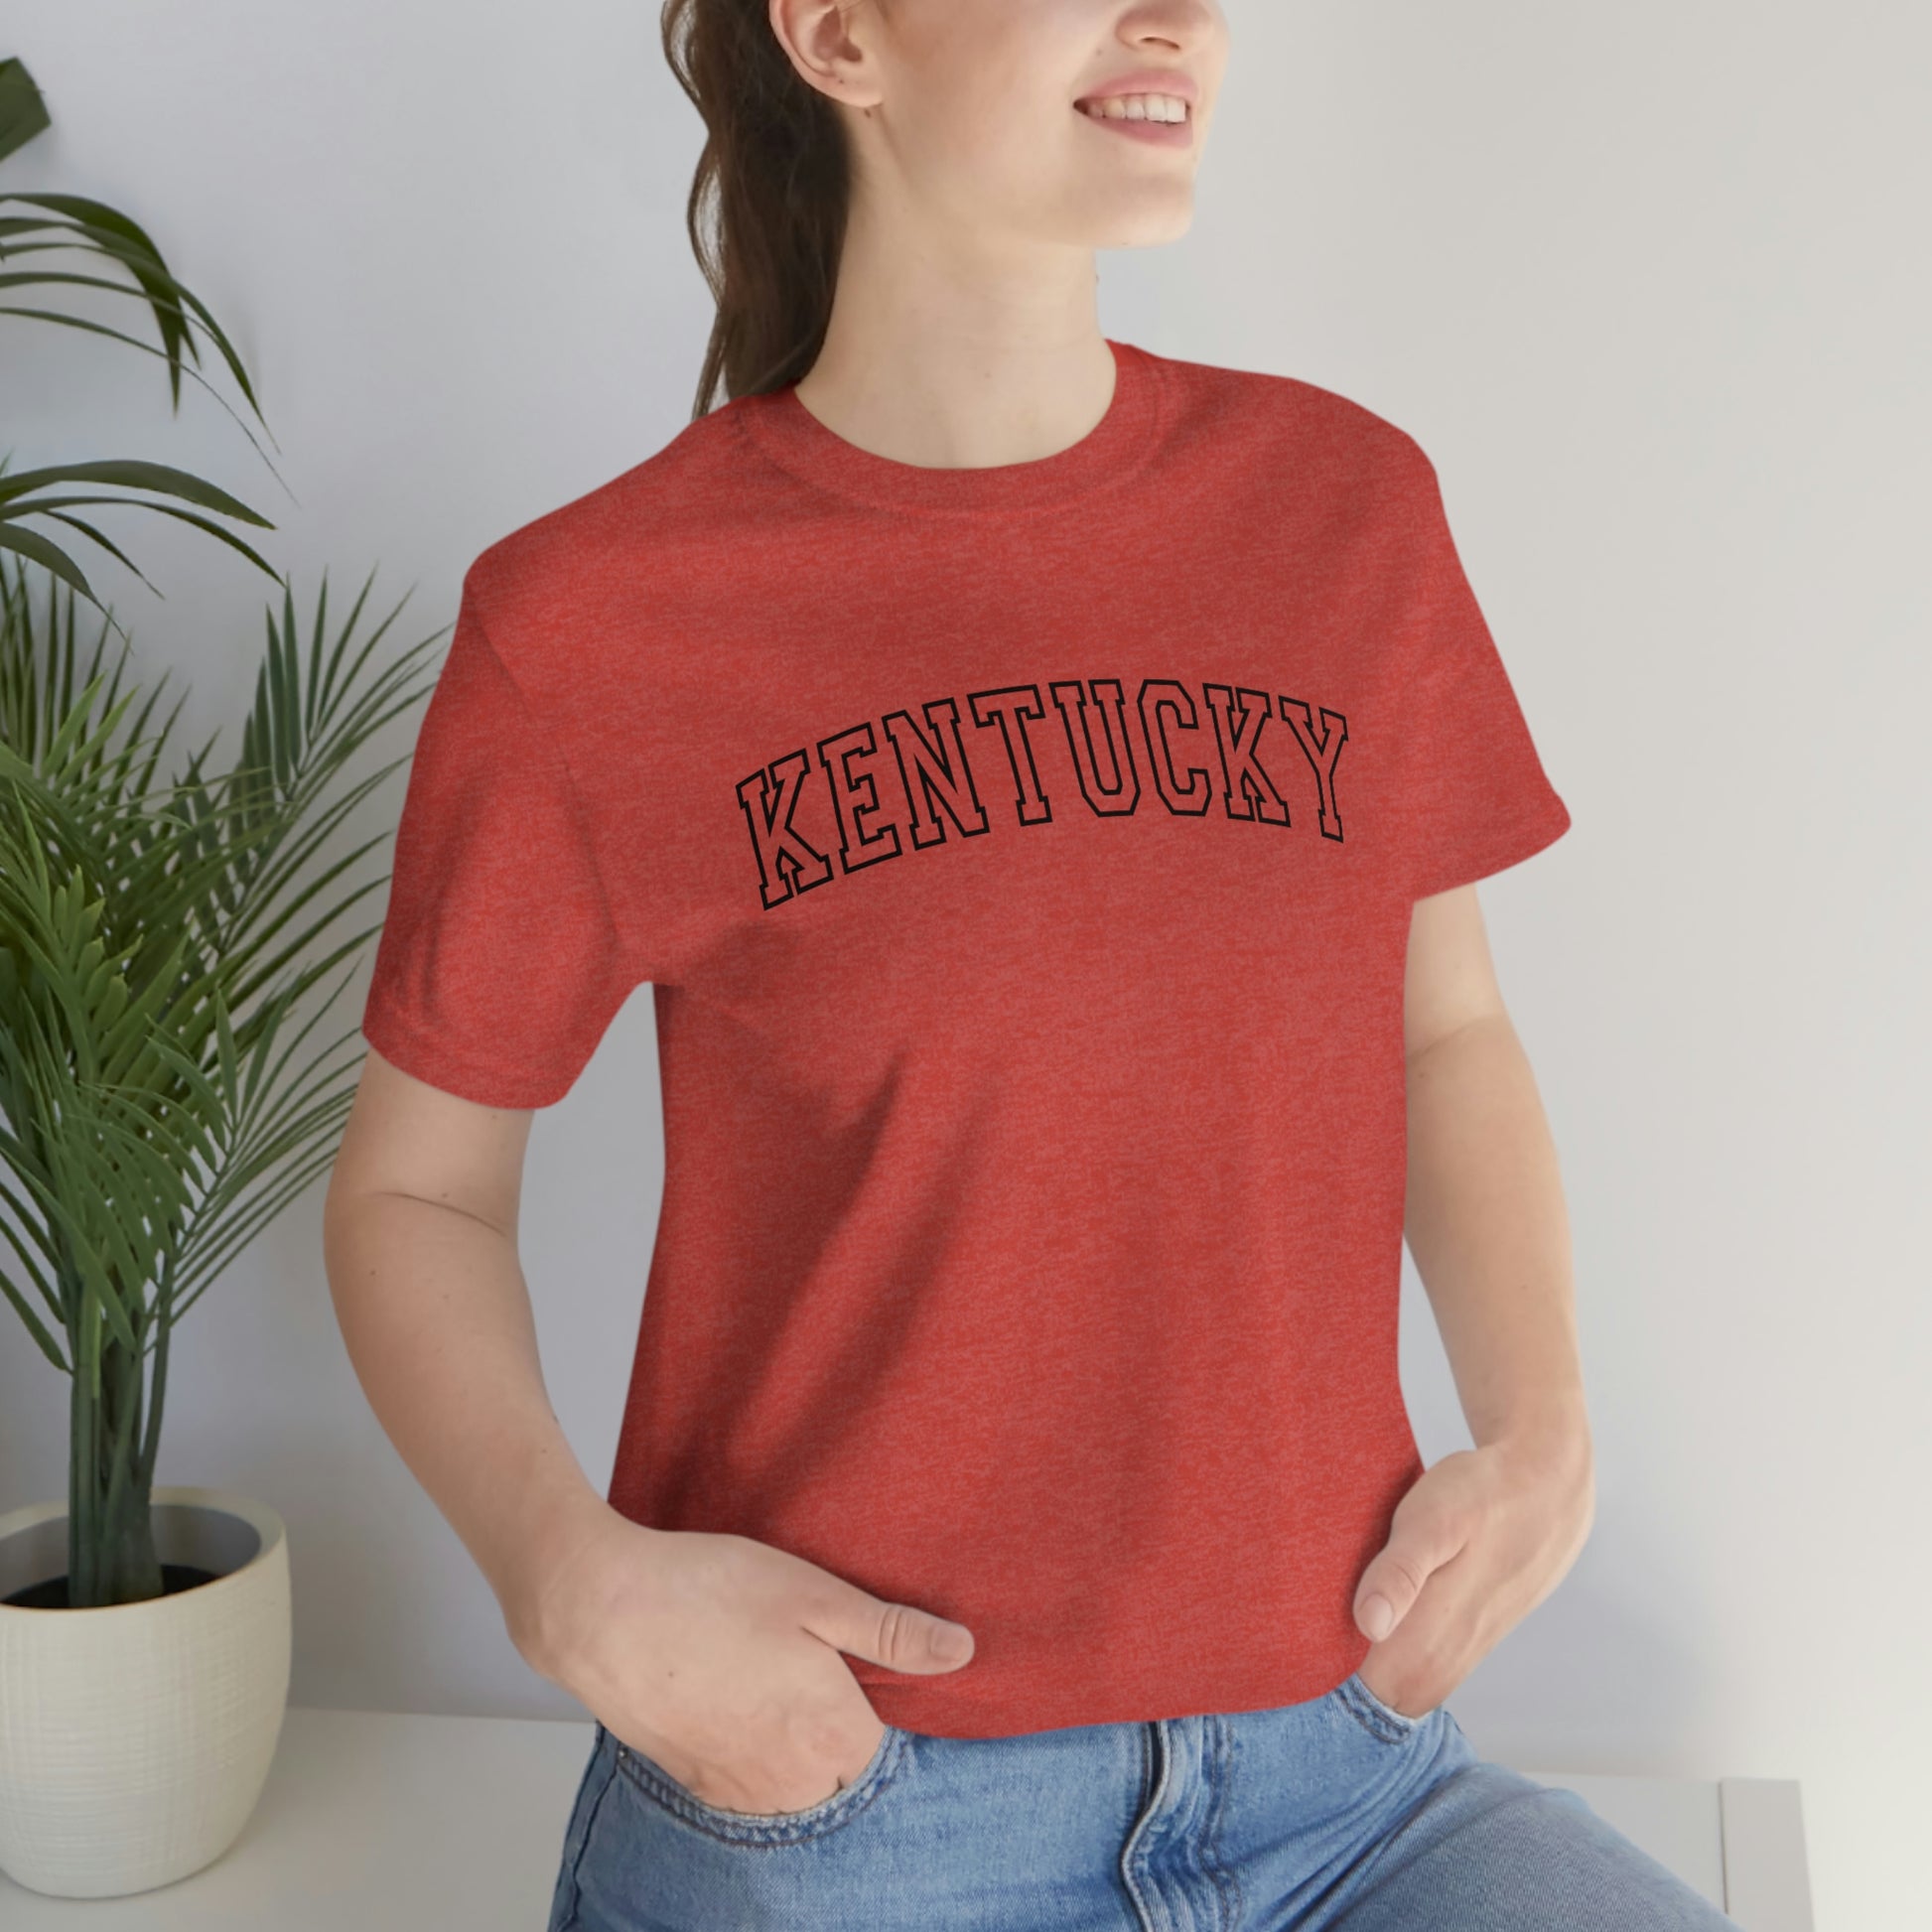 Kentucky Varsity Letters Arch Short Sleeve T-shirt